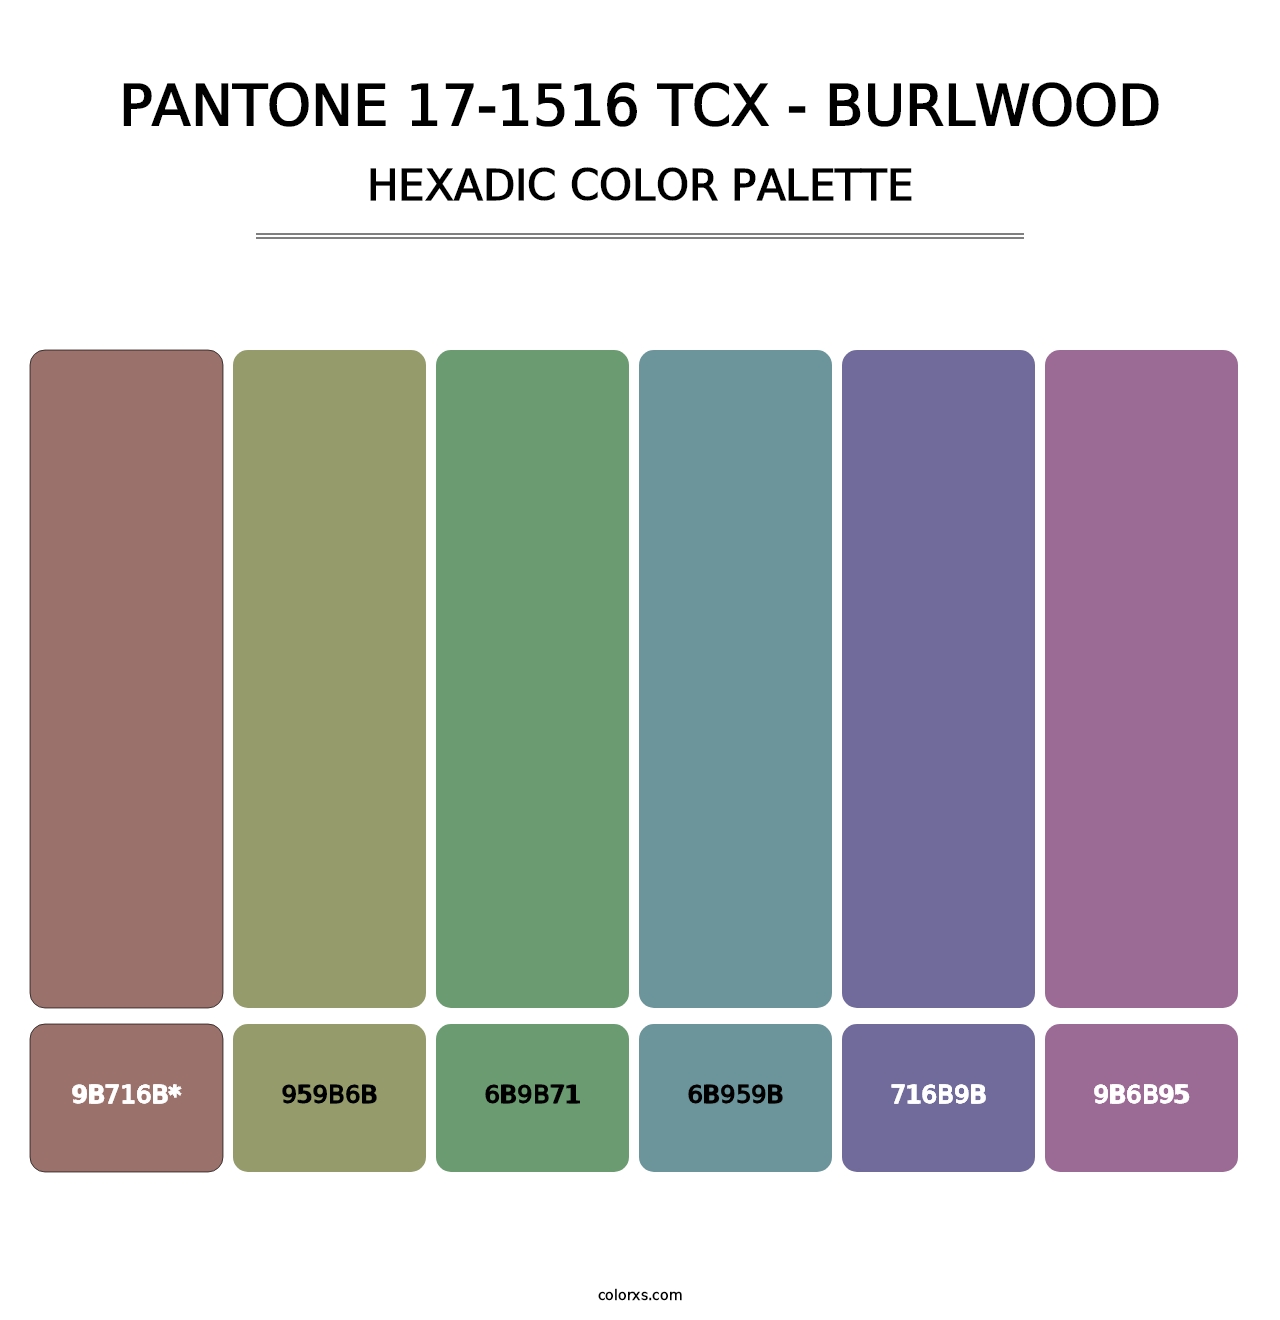 PANTONE 17-1516 TCX - Burlwood - Hexadic Color Palette